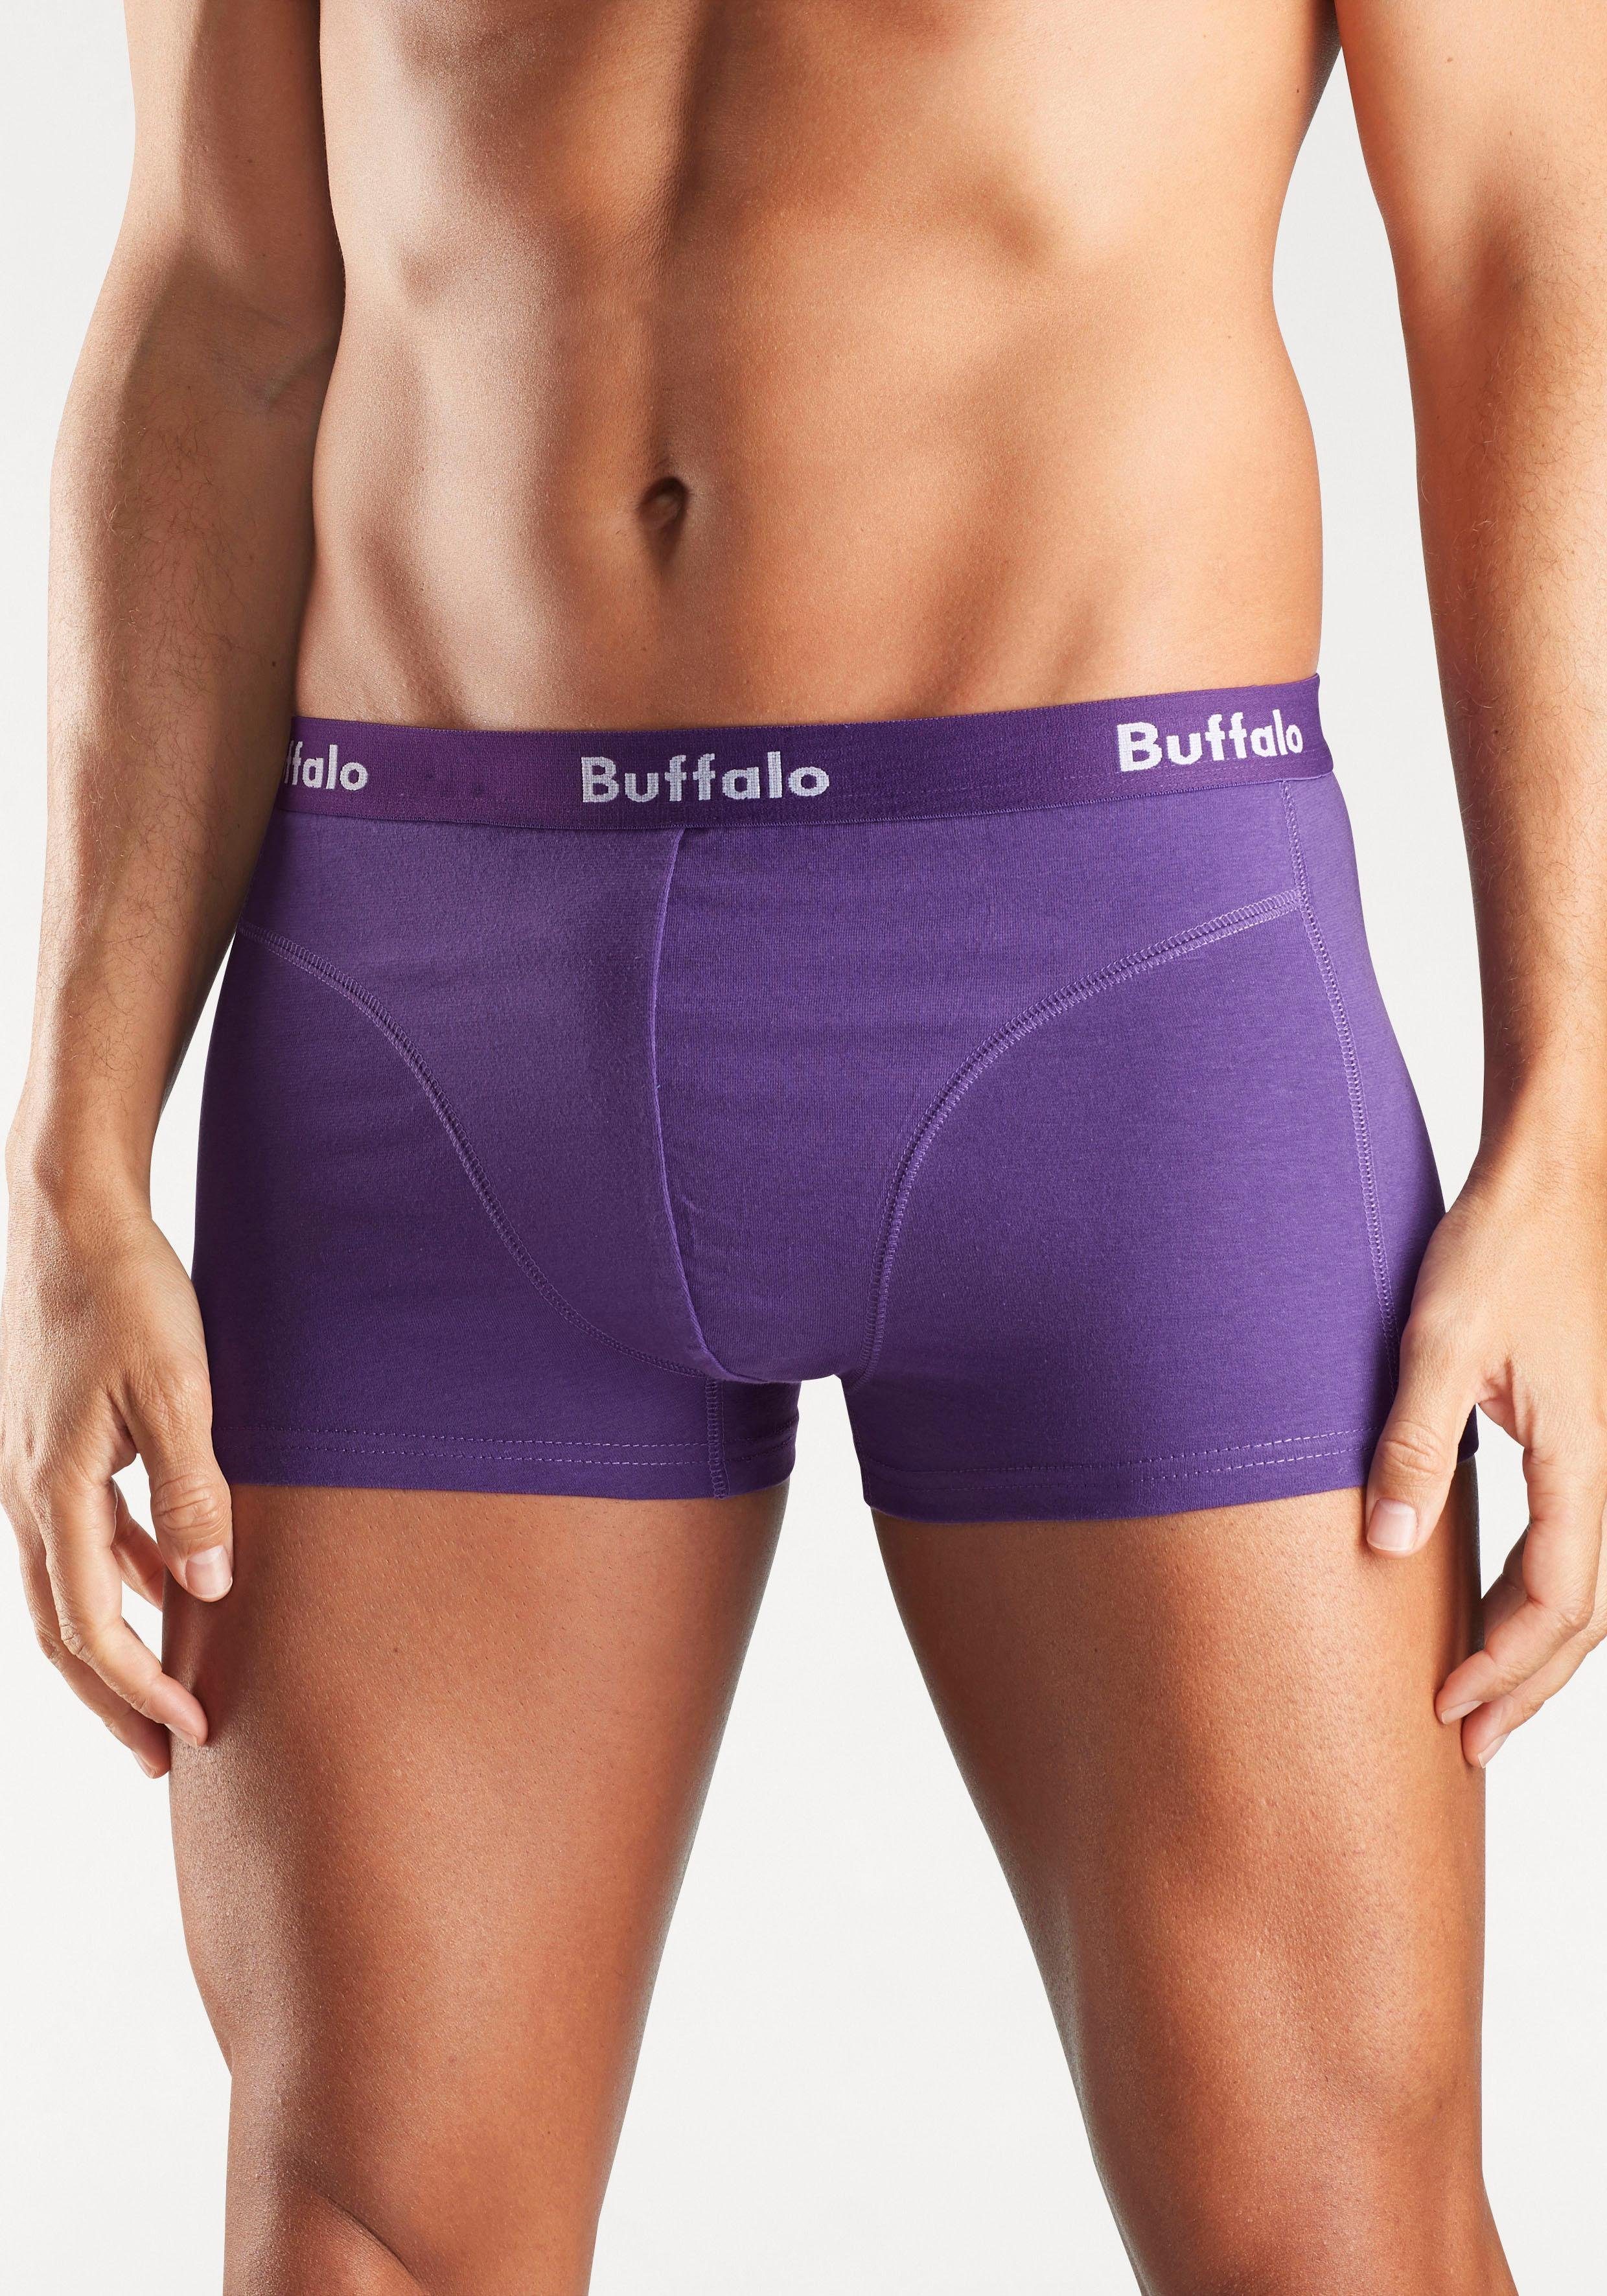 Buffalo Hipster (Packung, 3-St) grau mit petrol, lila, vorn Overlock-Nähten